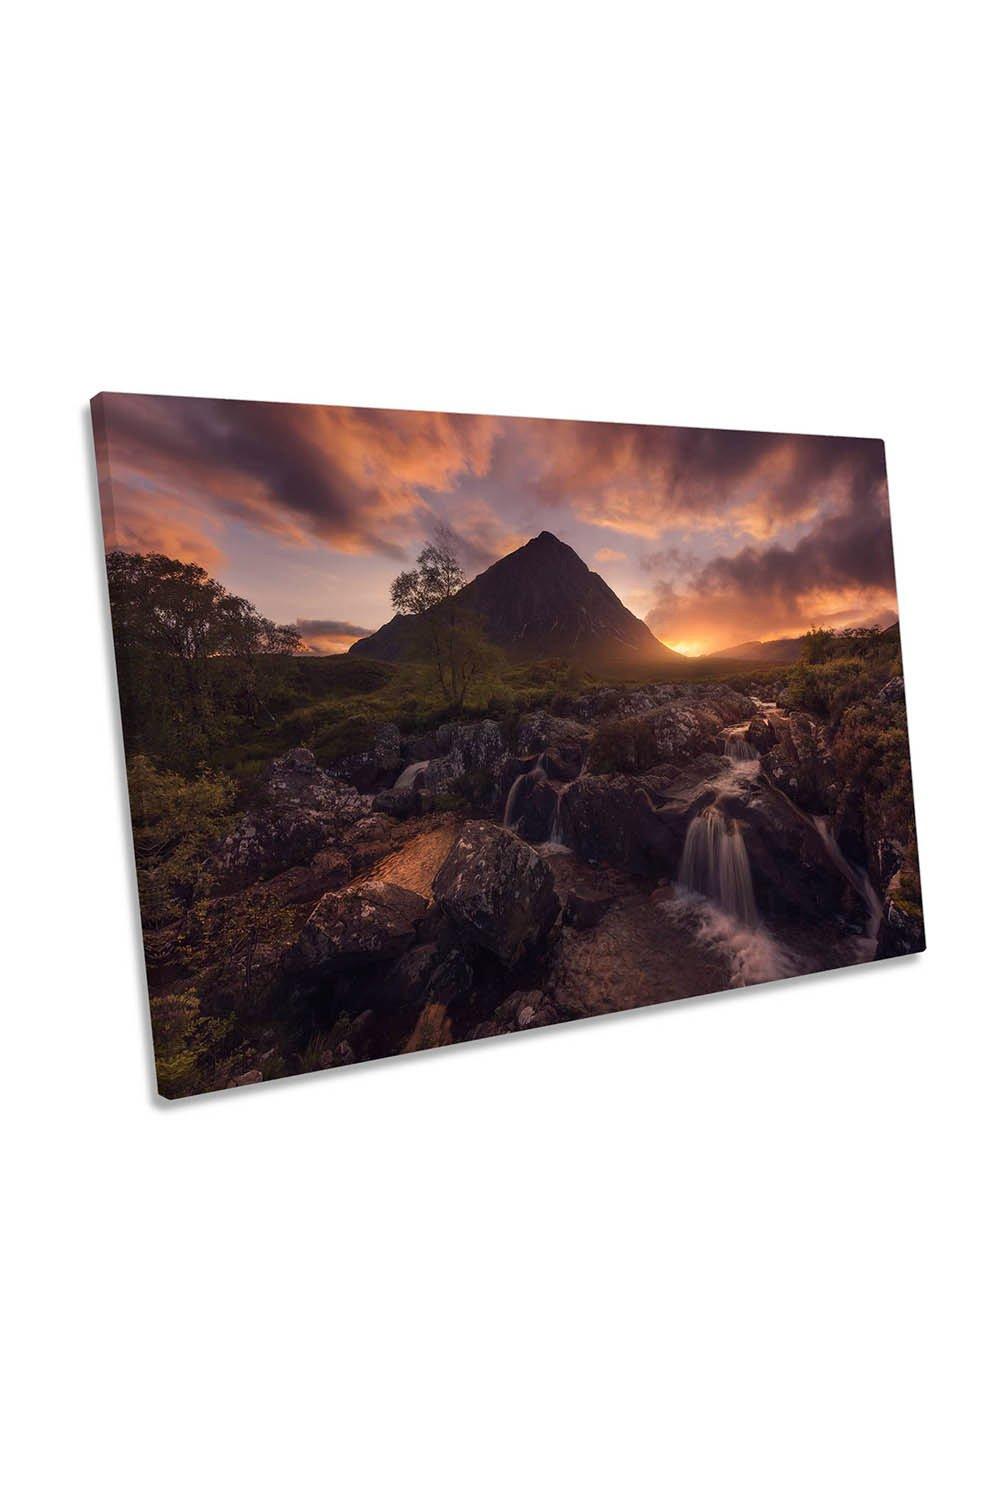 Etive Mor Mountain Stream Sunset Scotland Canvas Wall Art Picture Print